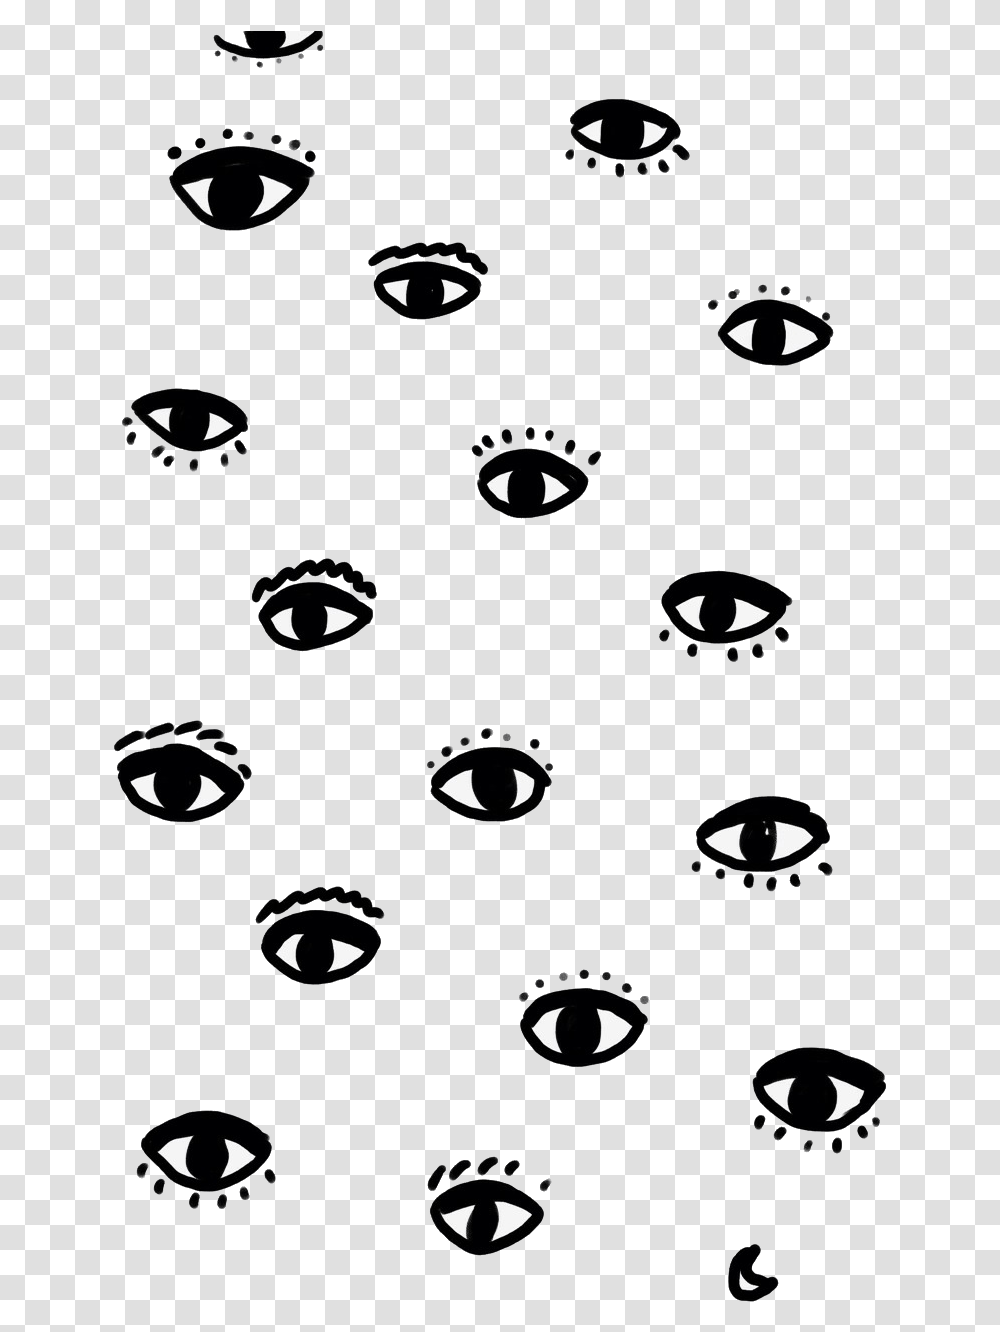 Kisspng Eye Desktop Wallpaper Pattern Eyeliner 5ada197e74ff46 Eye, Texture, Mobile Phone, Electronics, Cell Phone Transparent Png